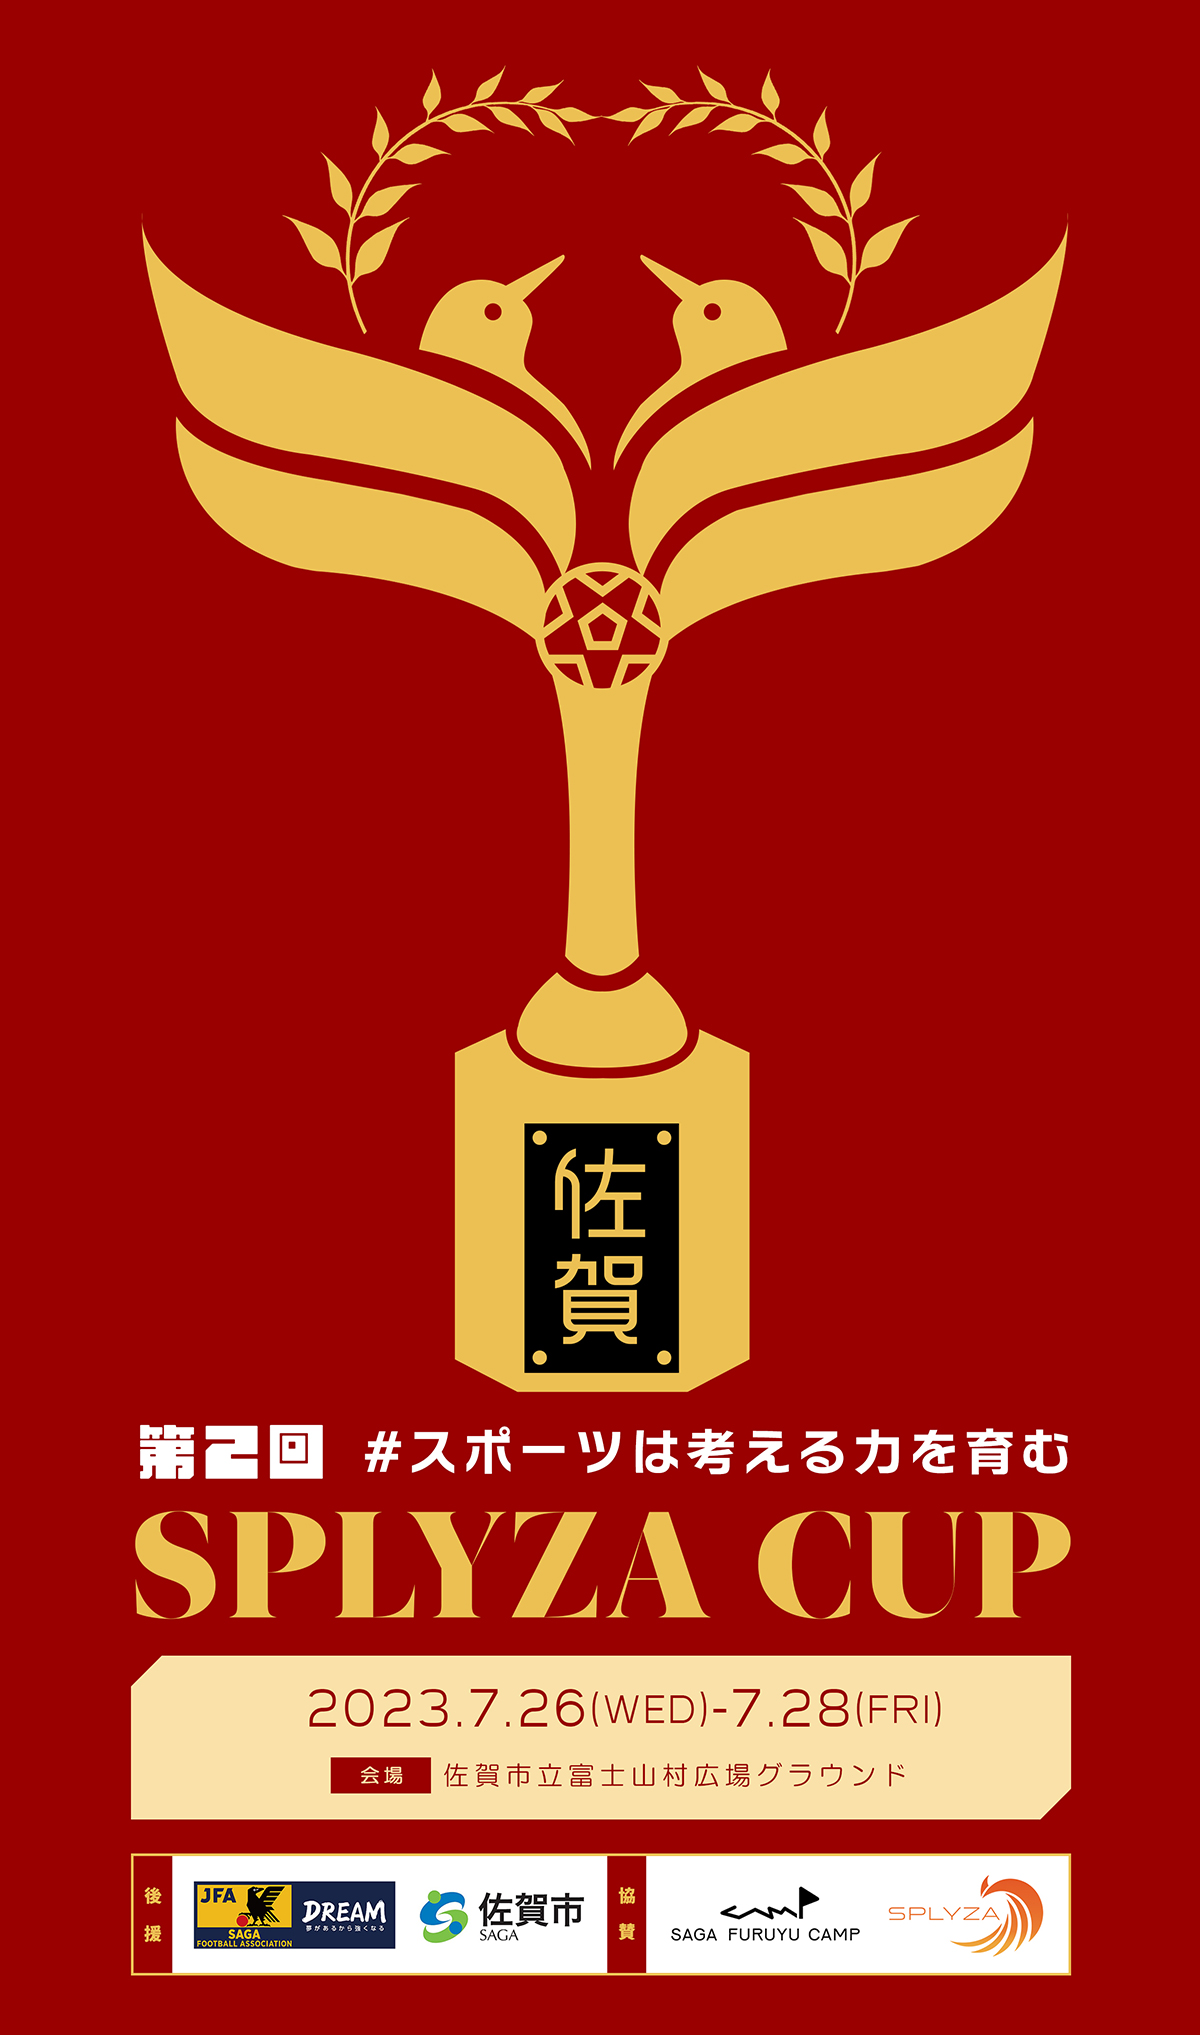 SPLYZA CUP